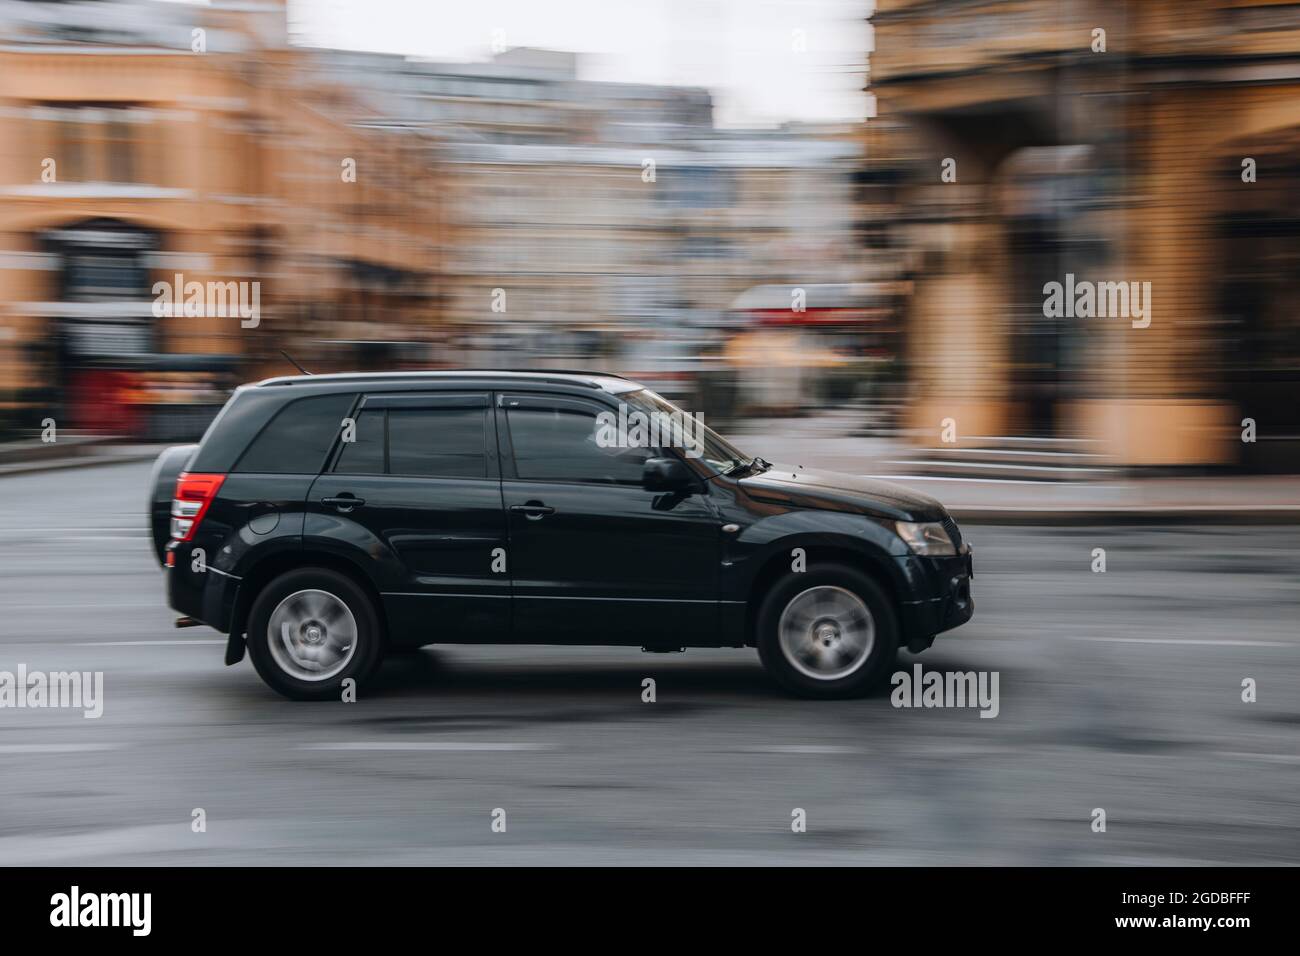 Ukraine, Kyiv - 2 June 2021: Black Suzuki Grand Vitara car moving on the street. Editorial Stock Photo